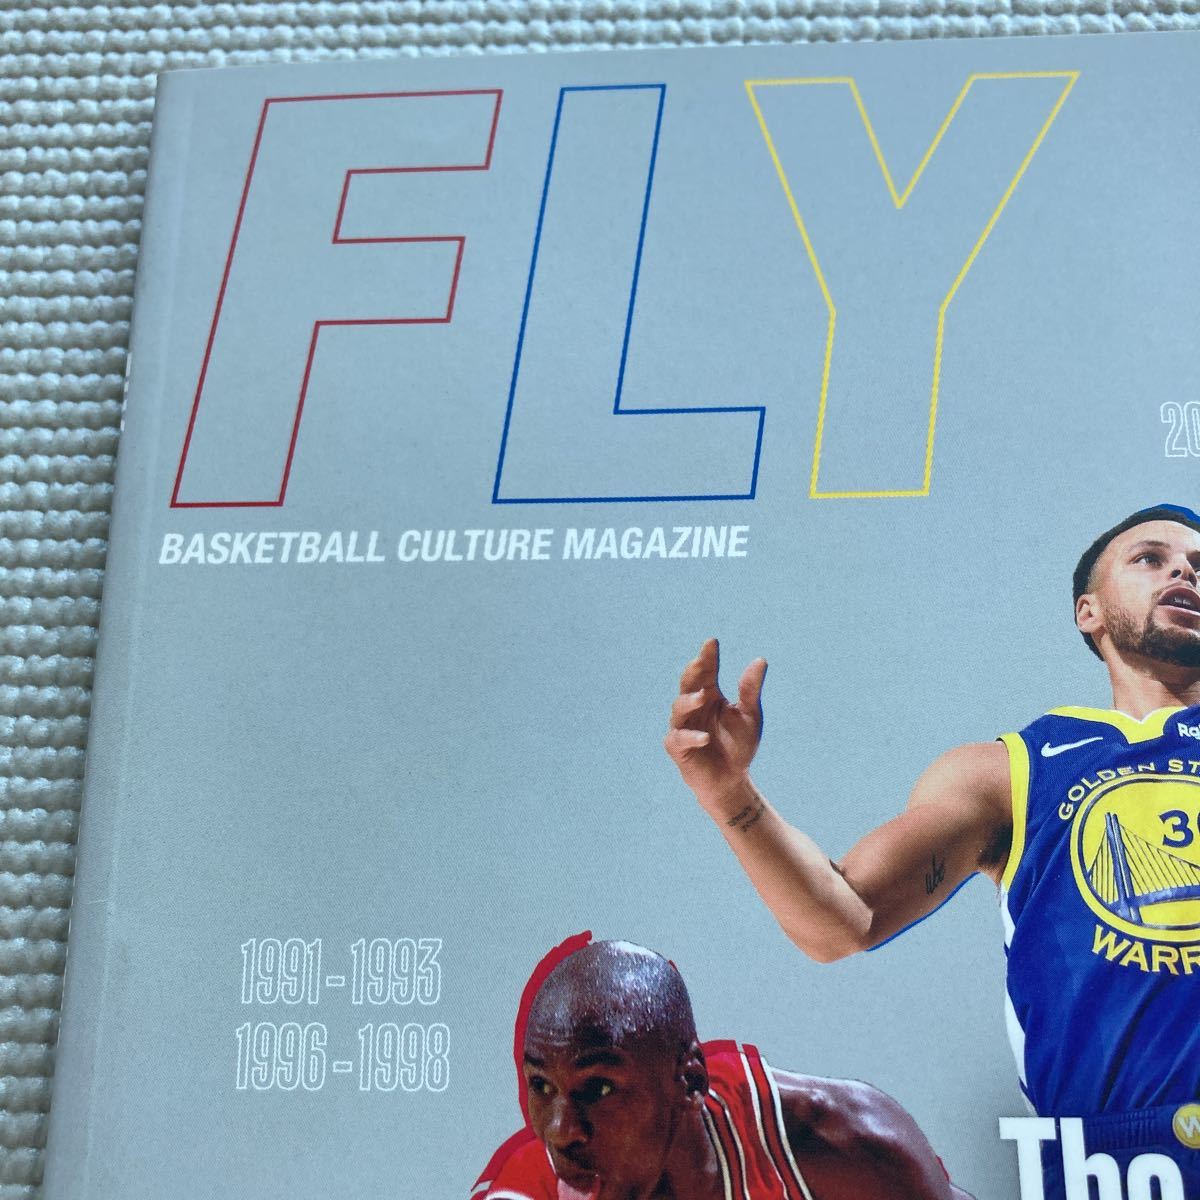  б/у FLY BASKETBALL CULTURE MAGANIE ISSUE 08 баскетбол NBA журнал 